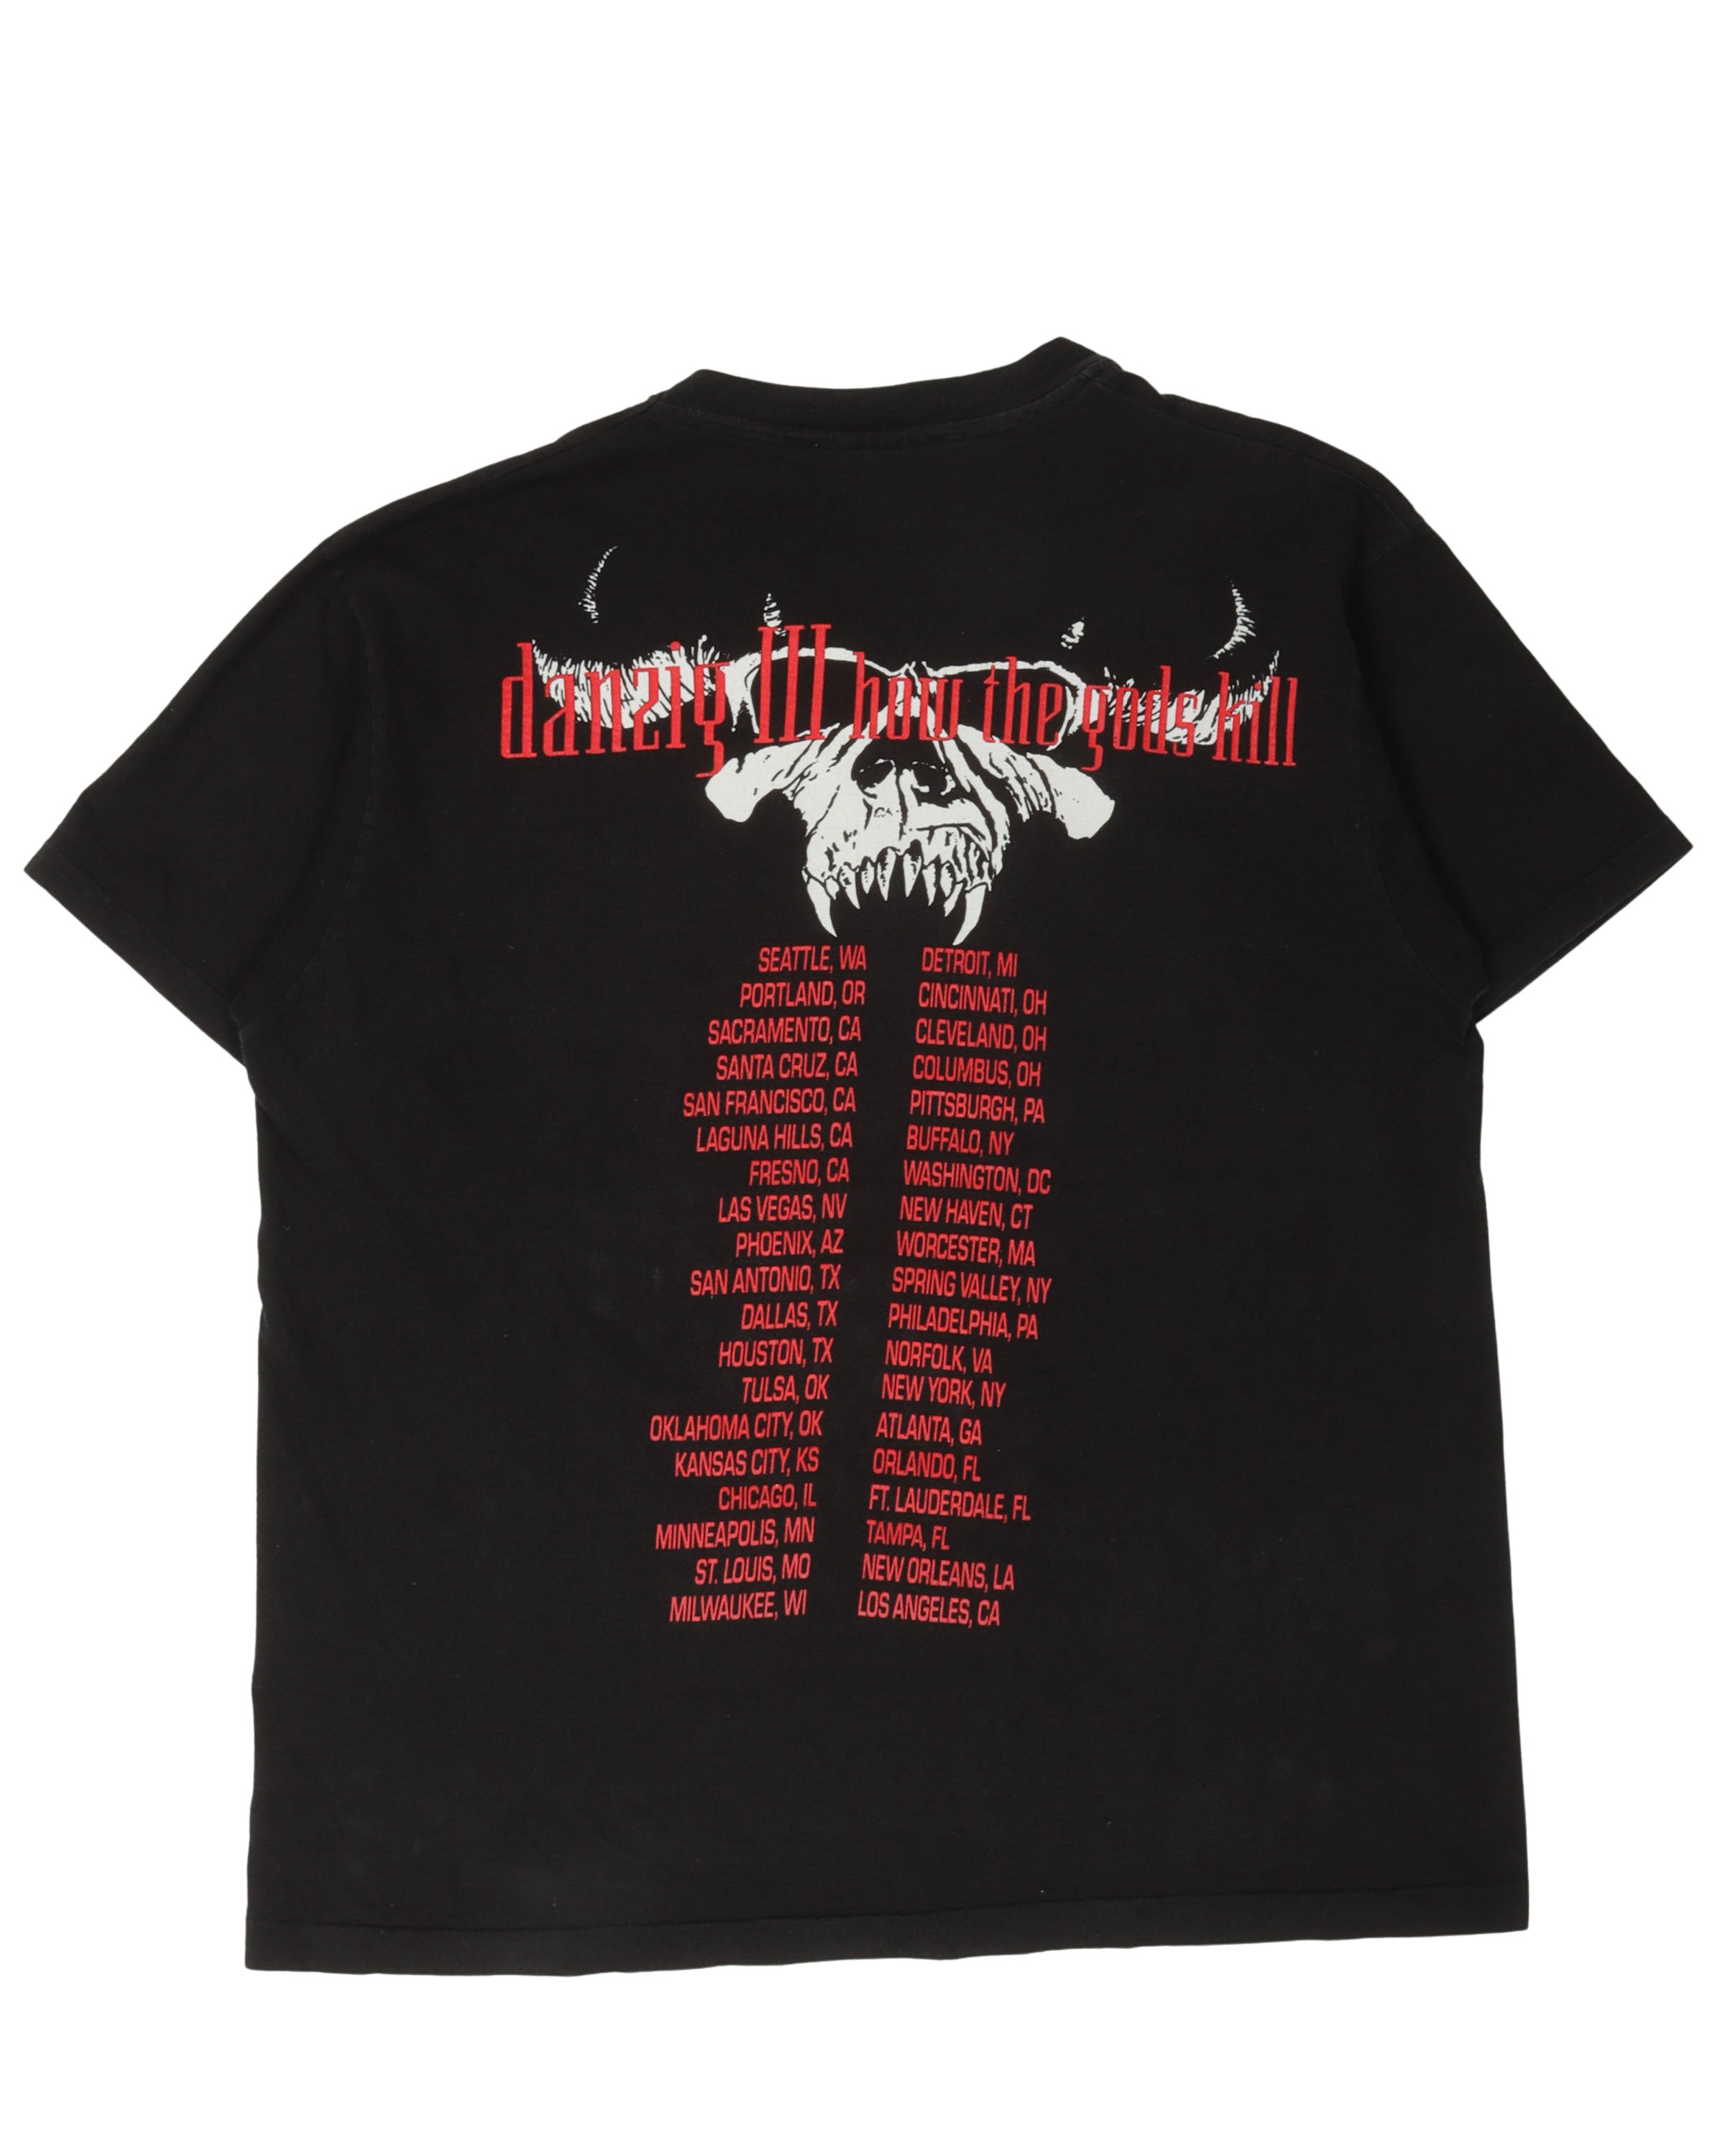 Danzig How Gods Kill T-Shirt